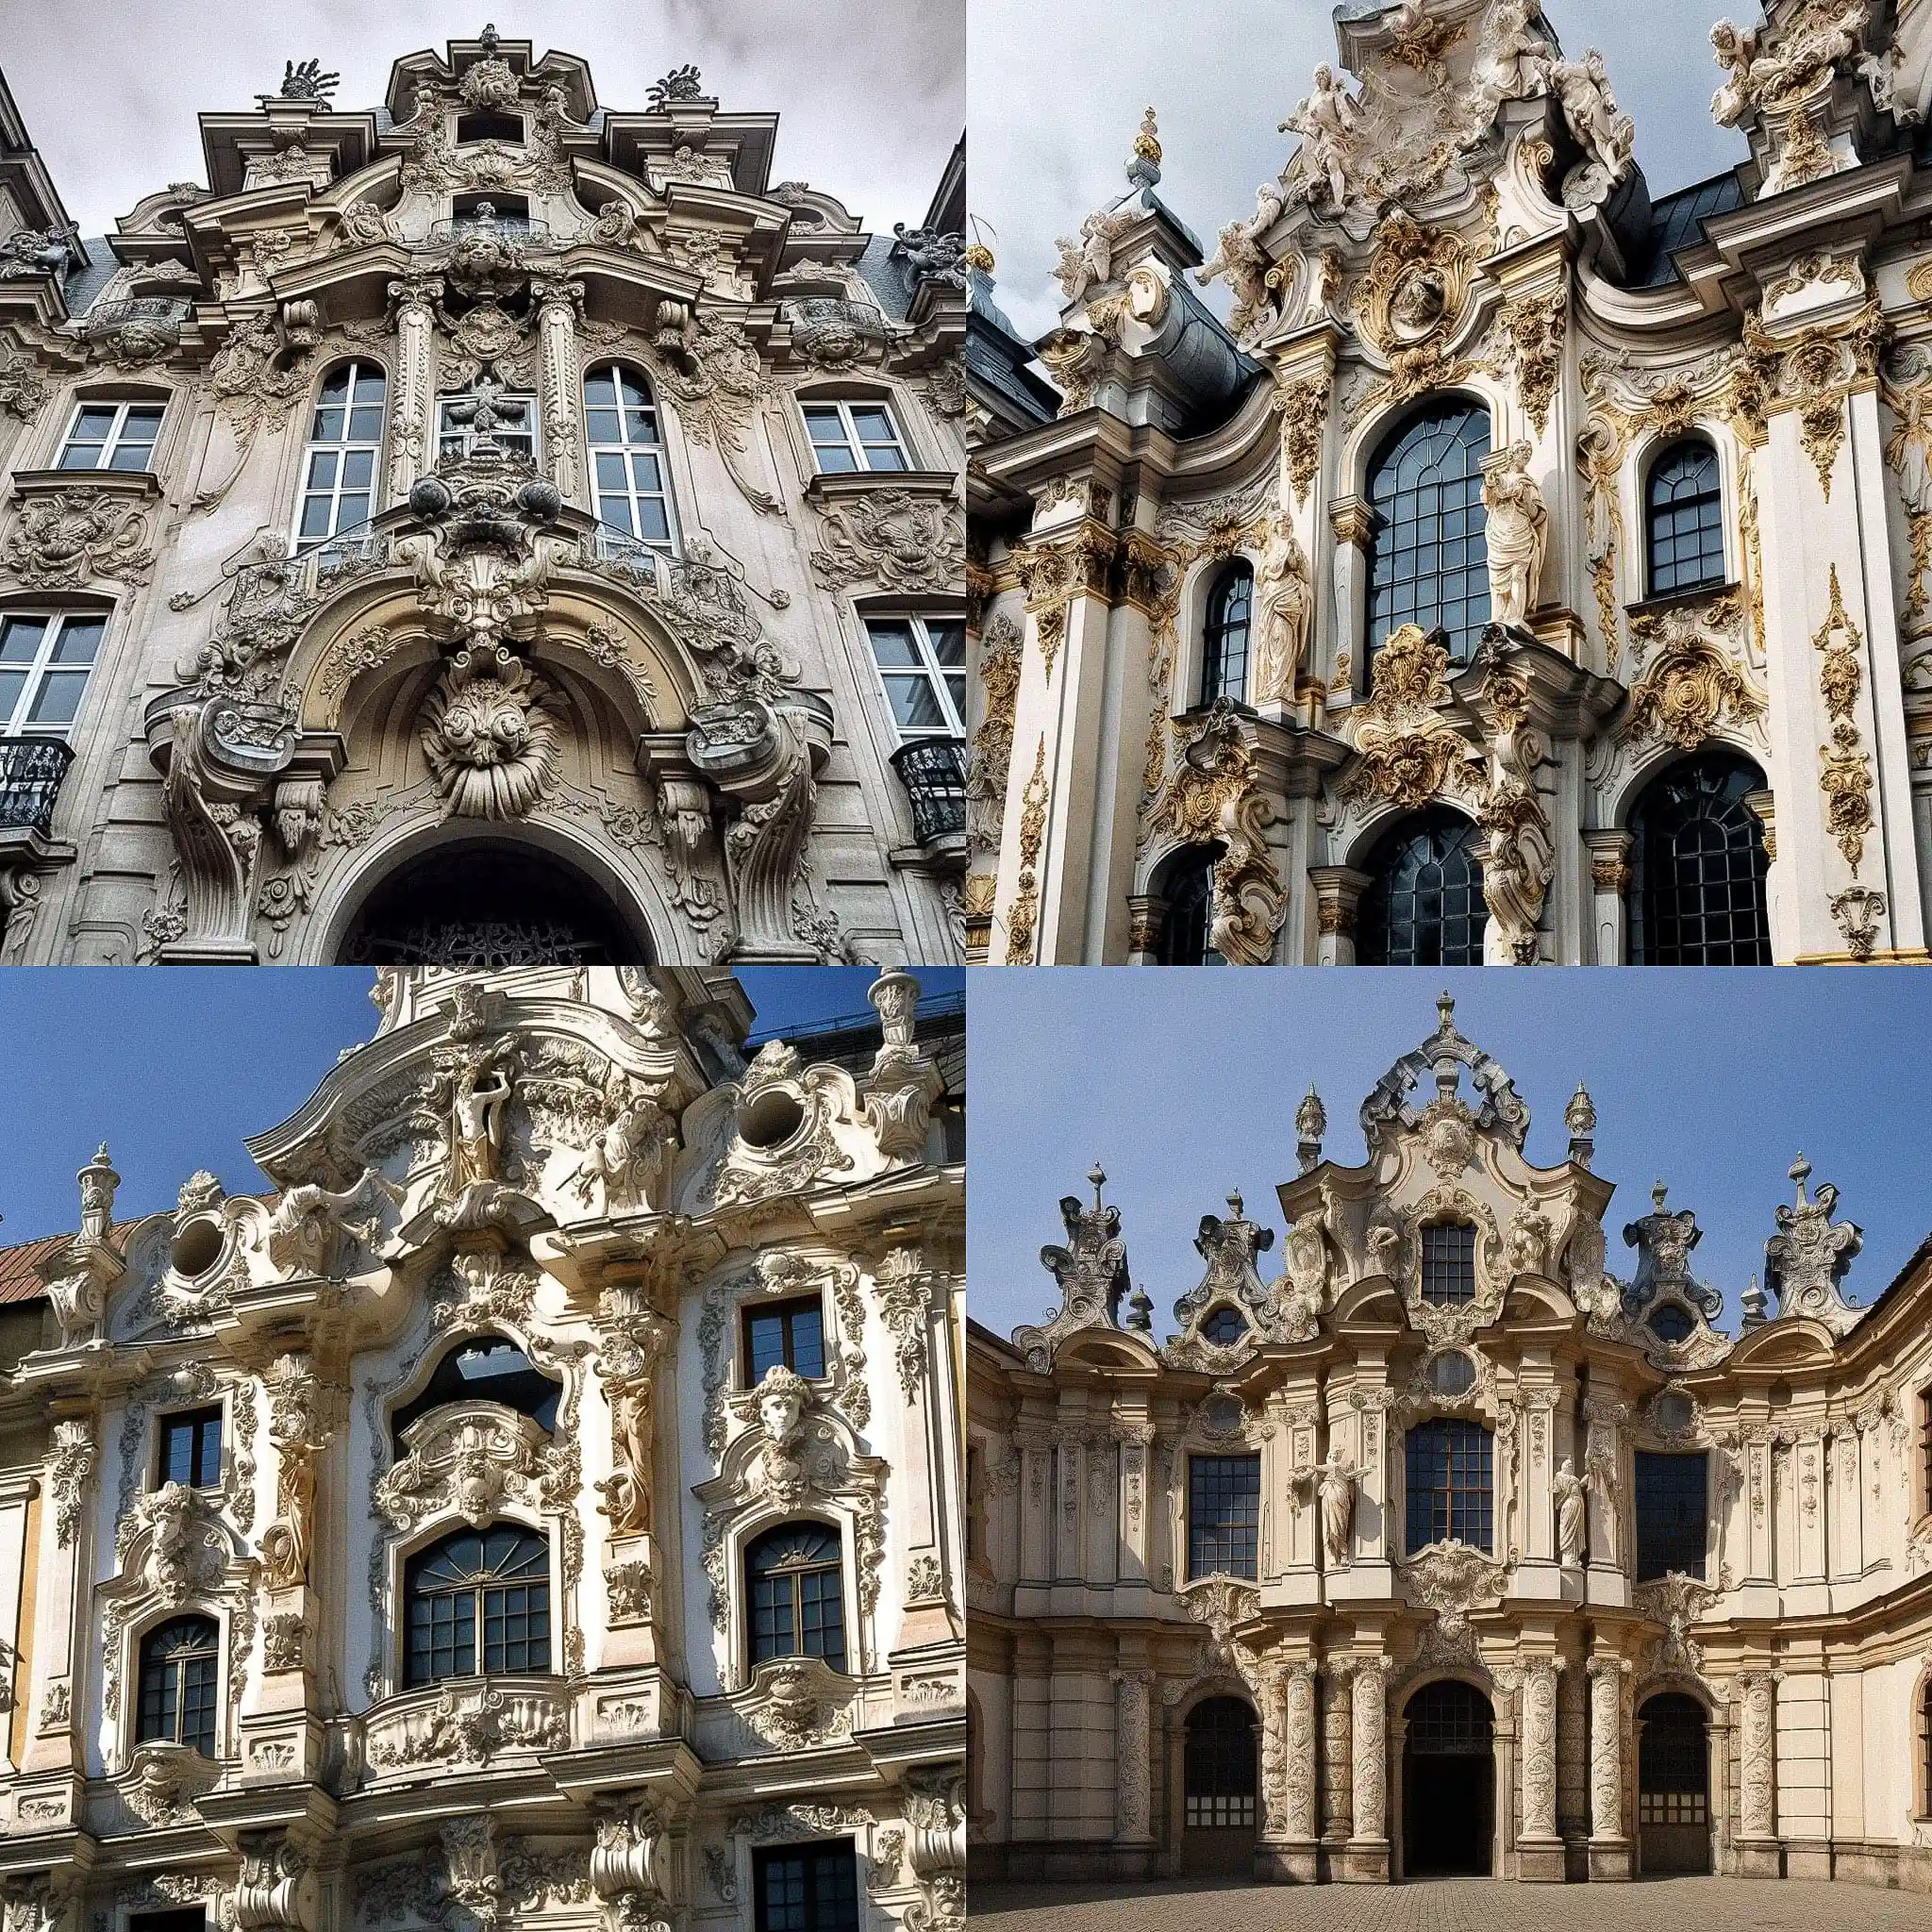 -巴洛克建筑 baroque architecture风格midjourney AI绘画作品